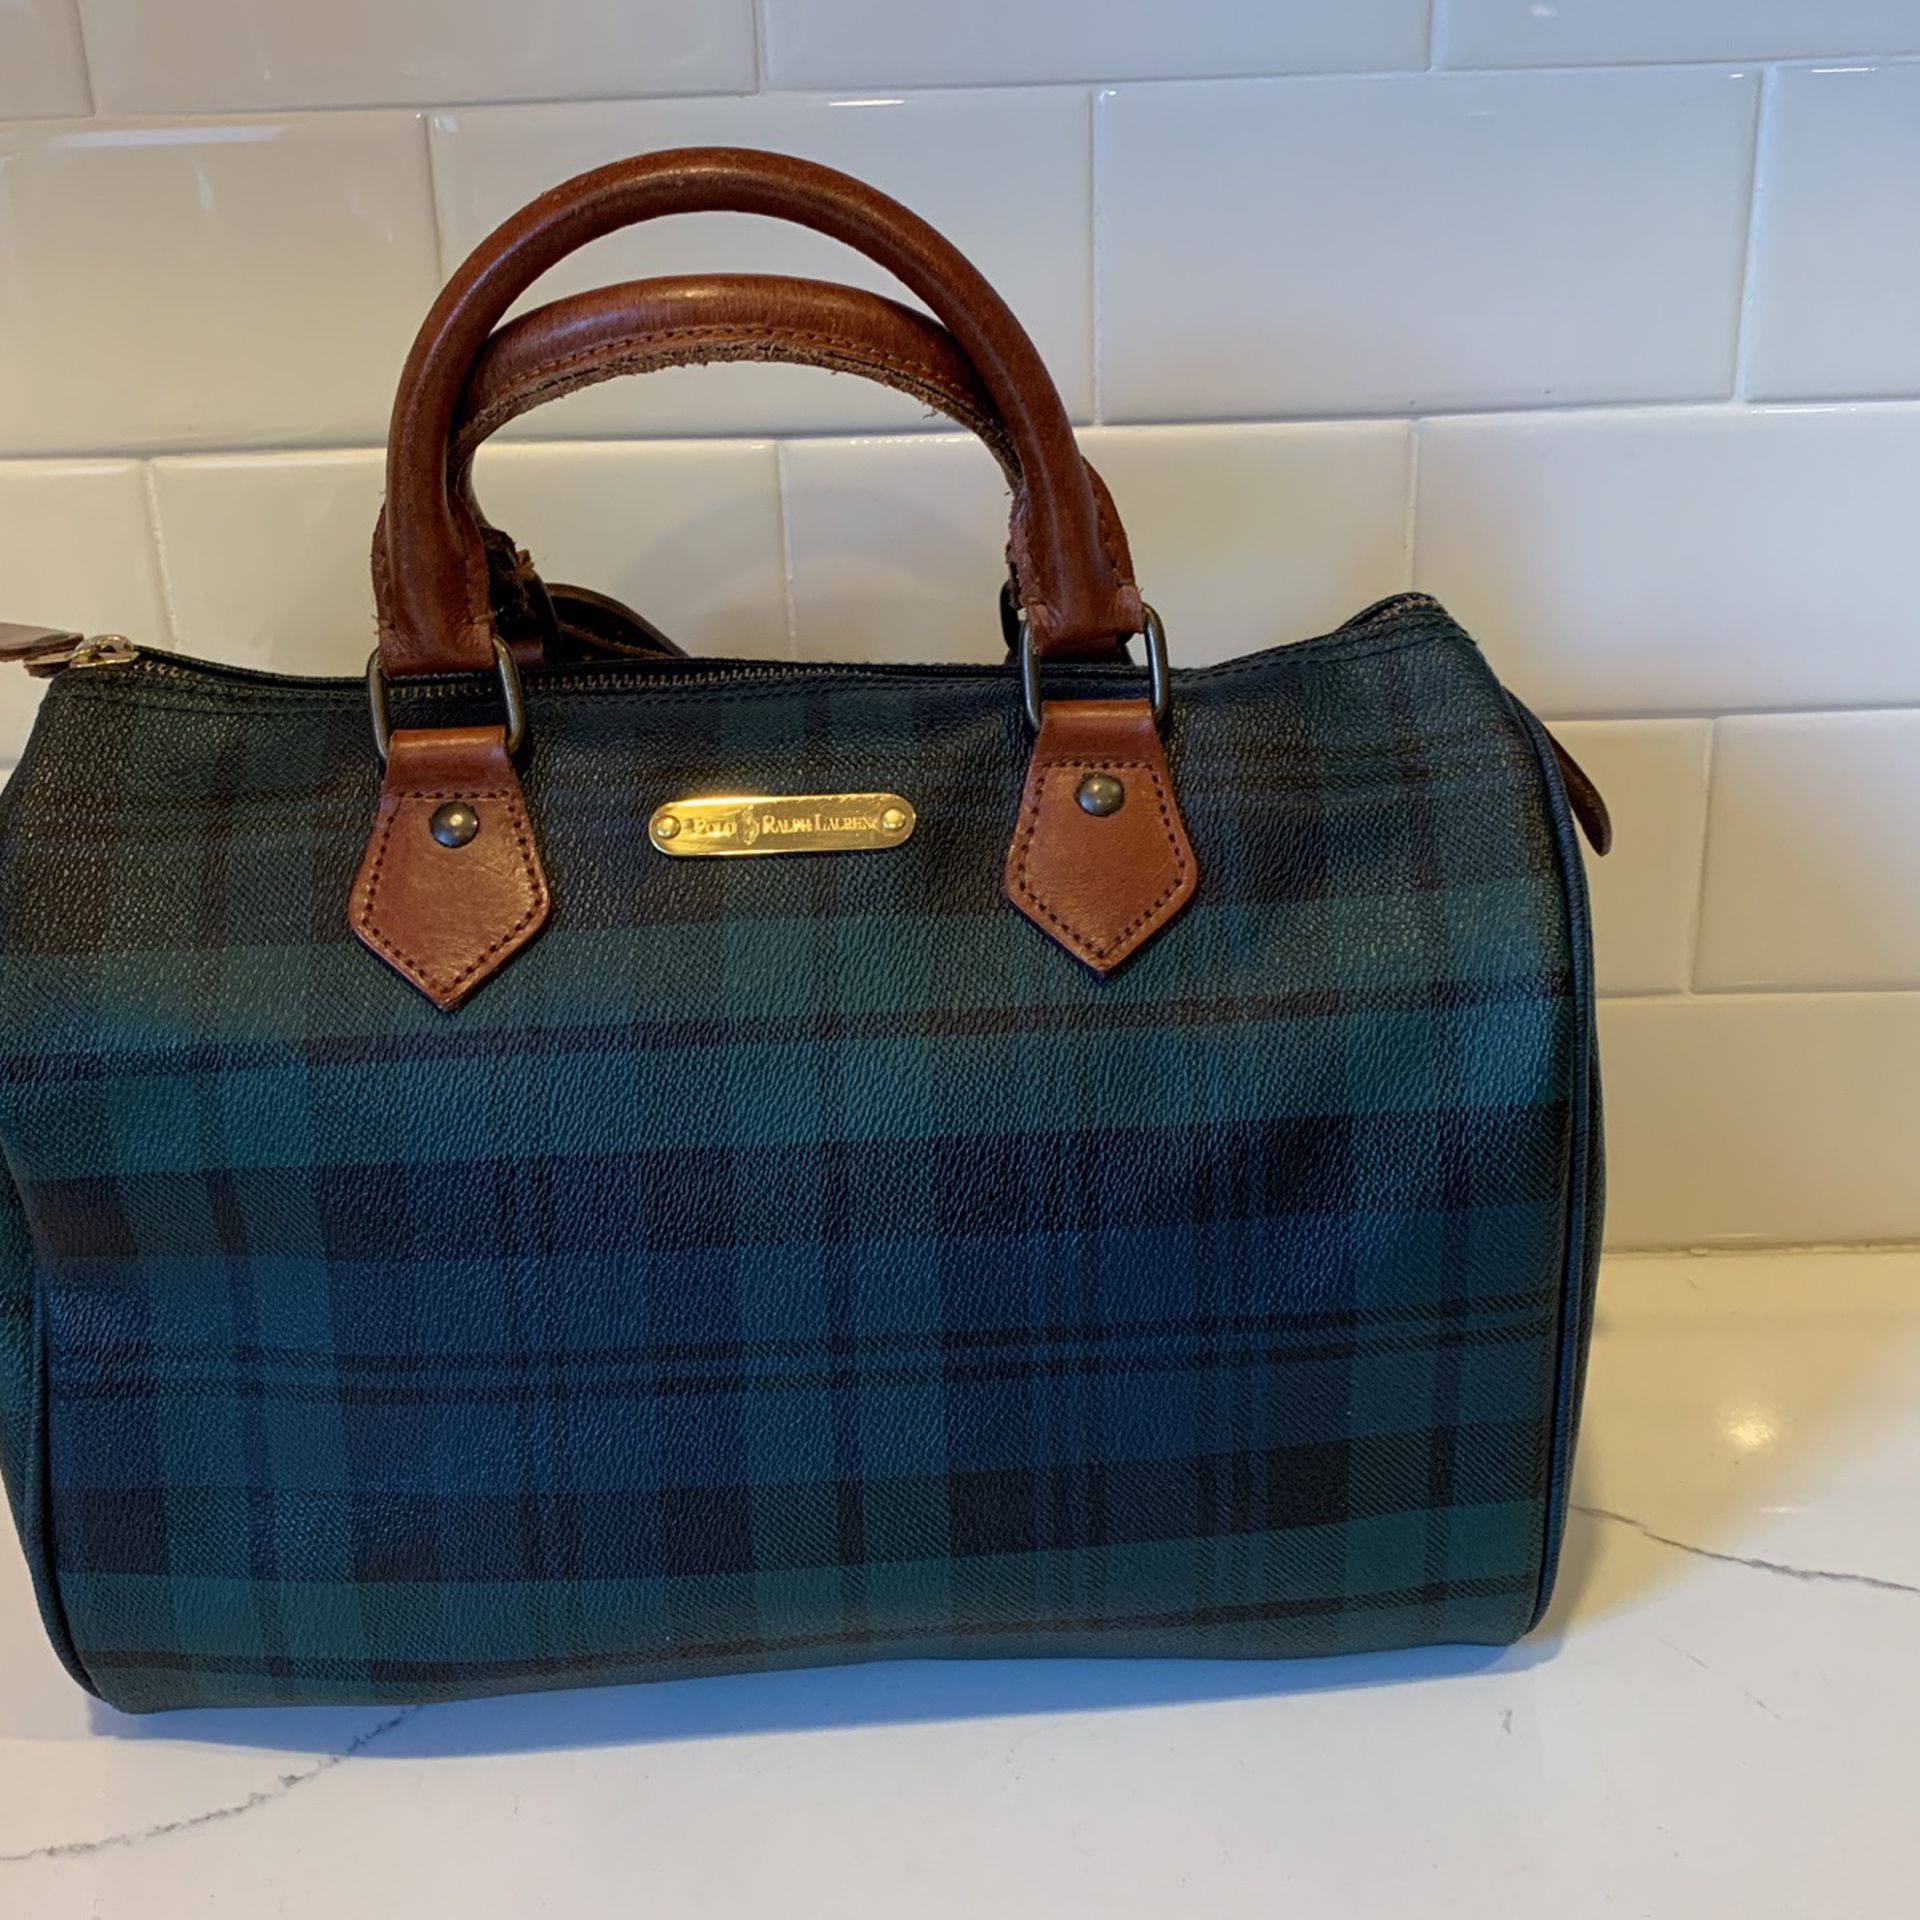 Polo Ralph Lauren Vintage Plaid Leather Handbag Purse for Sale in ...